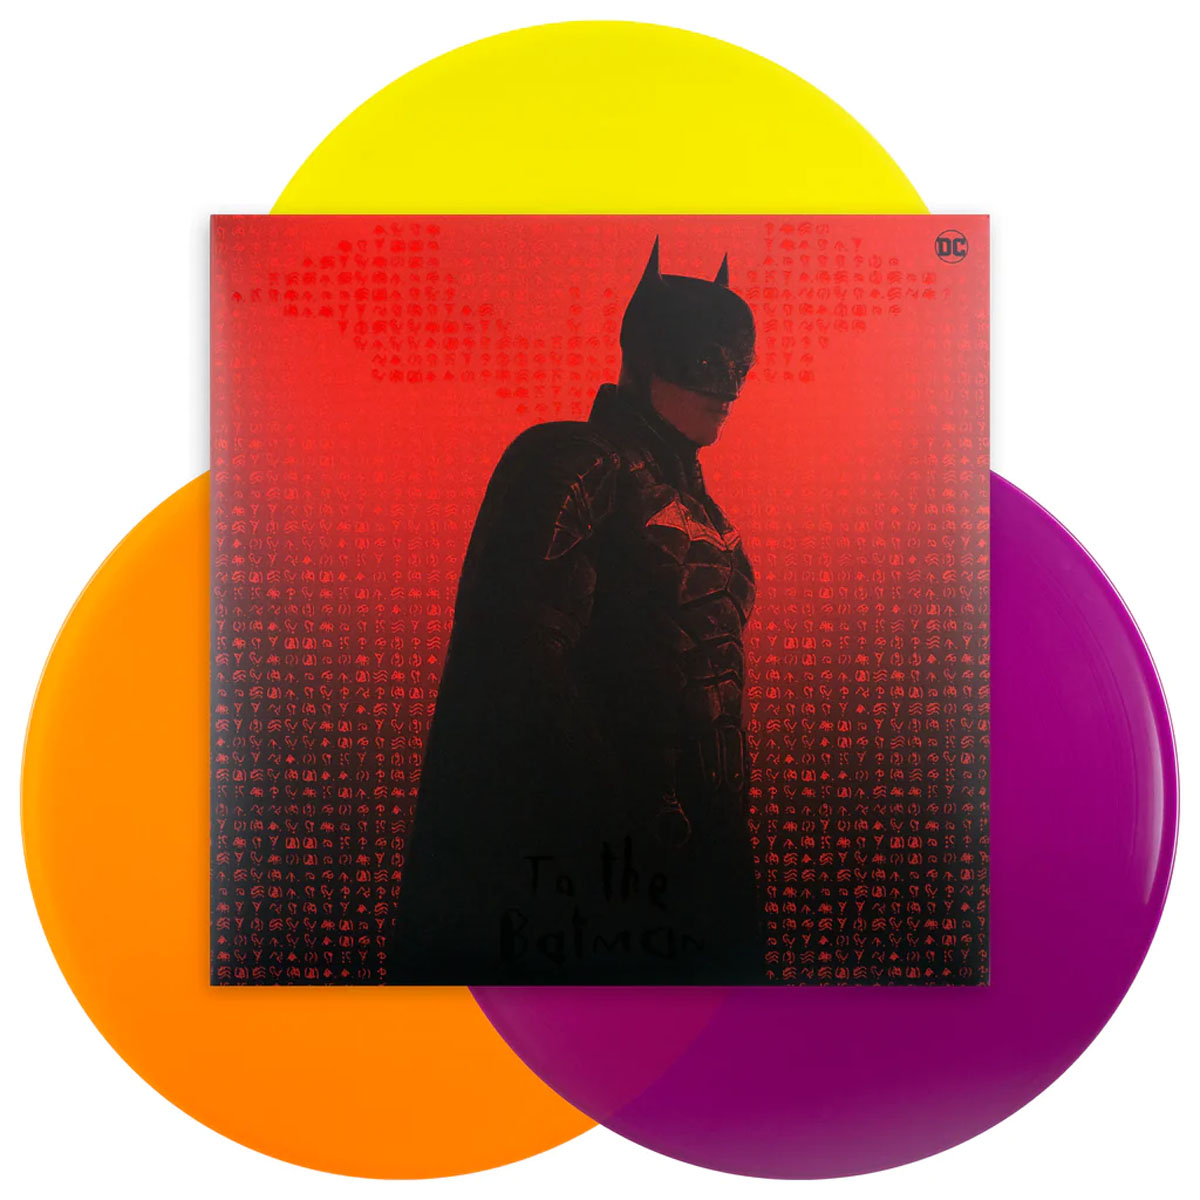 Vinil exclusivo da Mondo para a trilha sonora de The Batman.